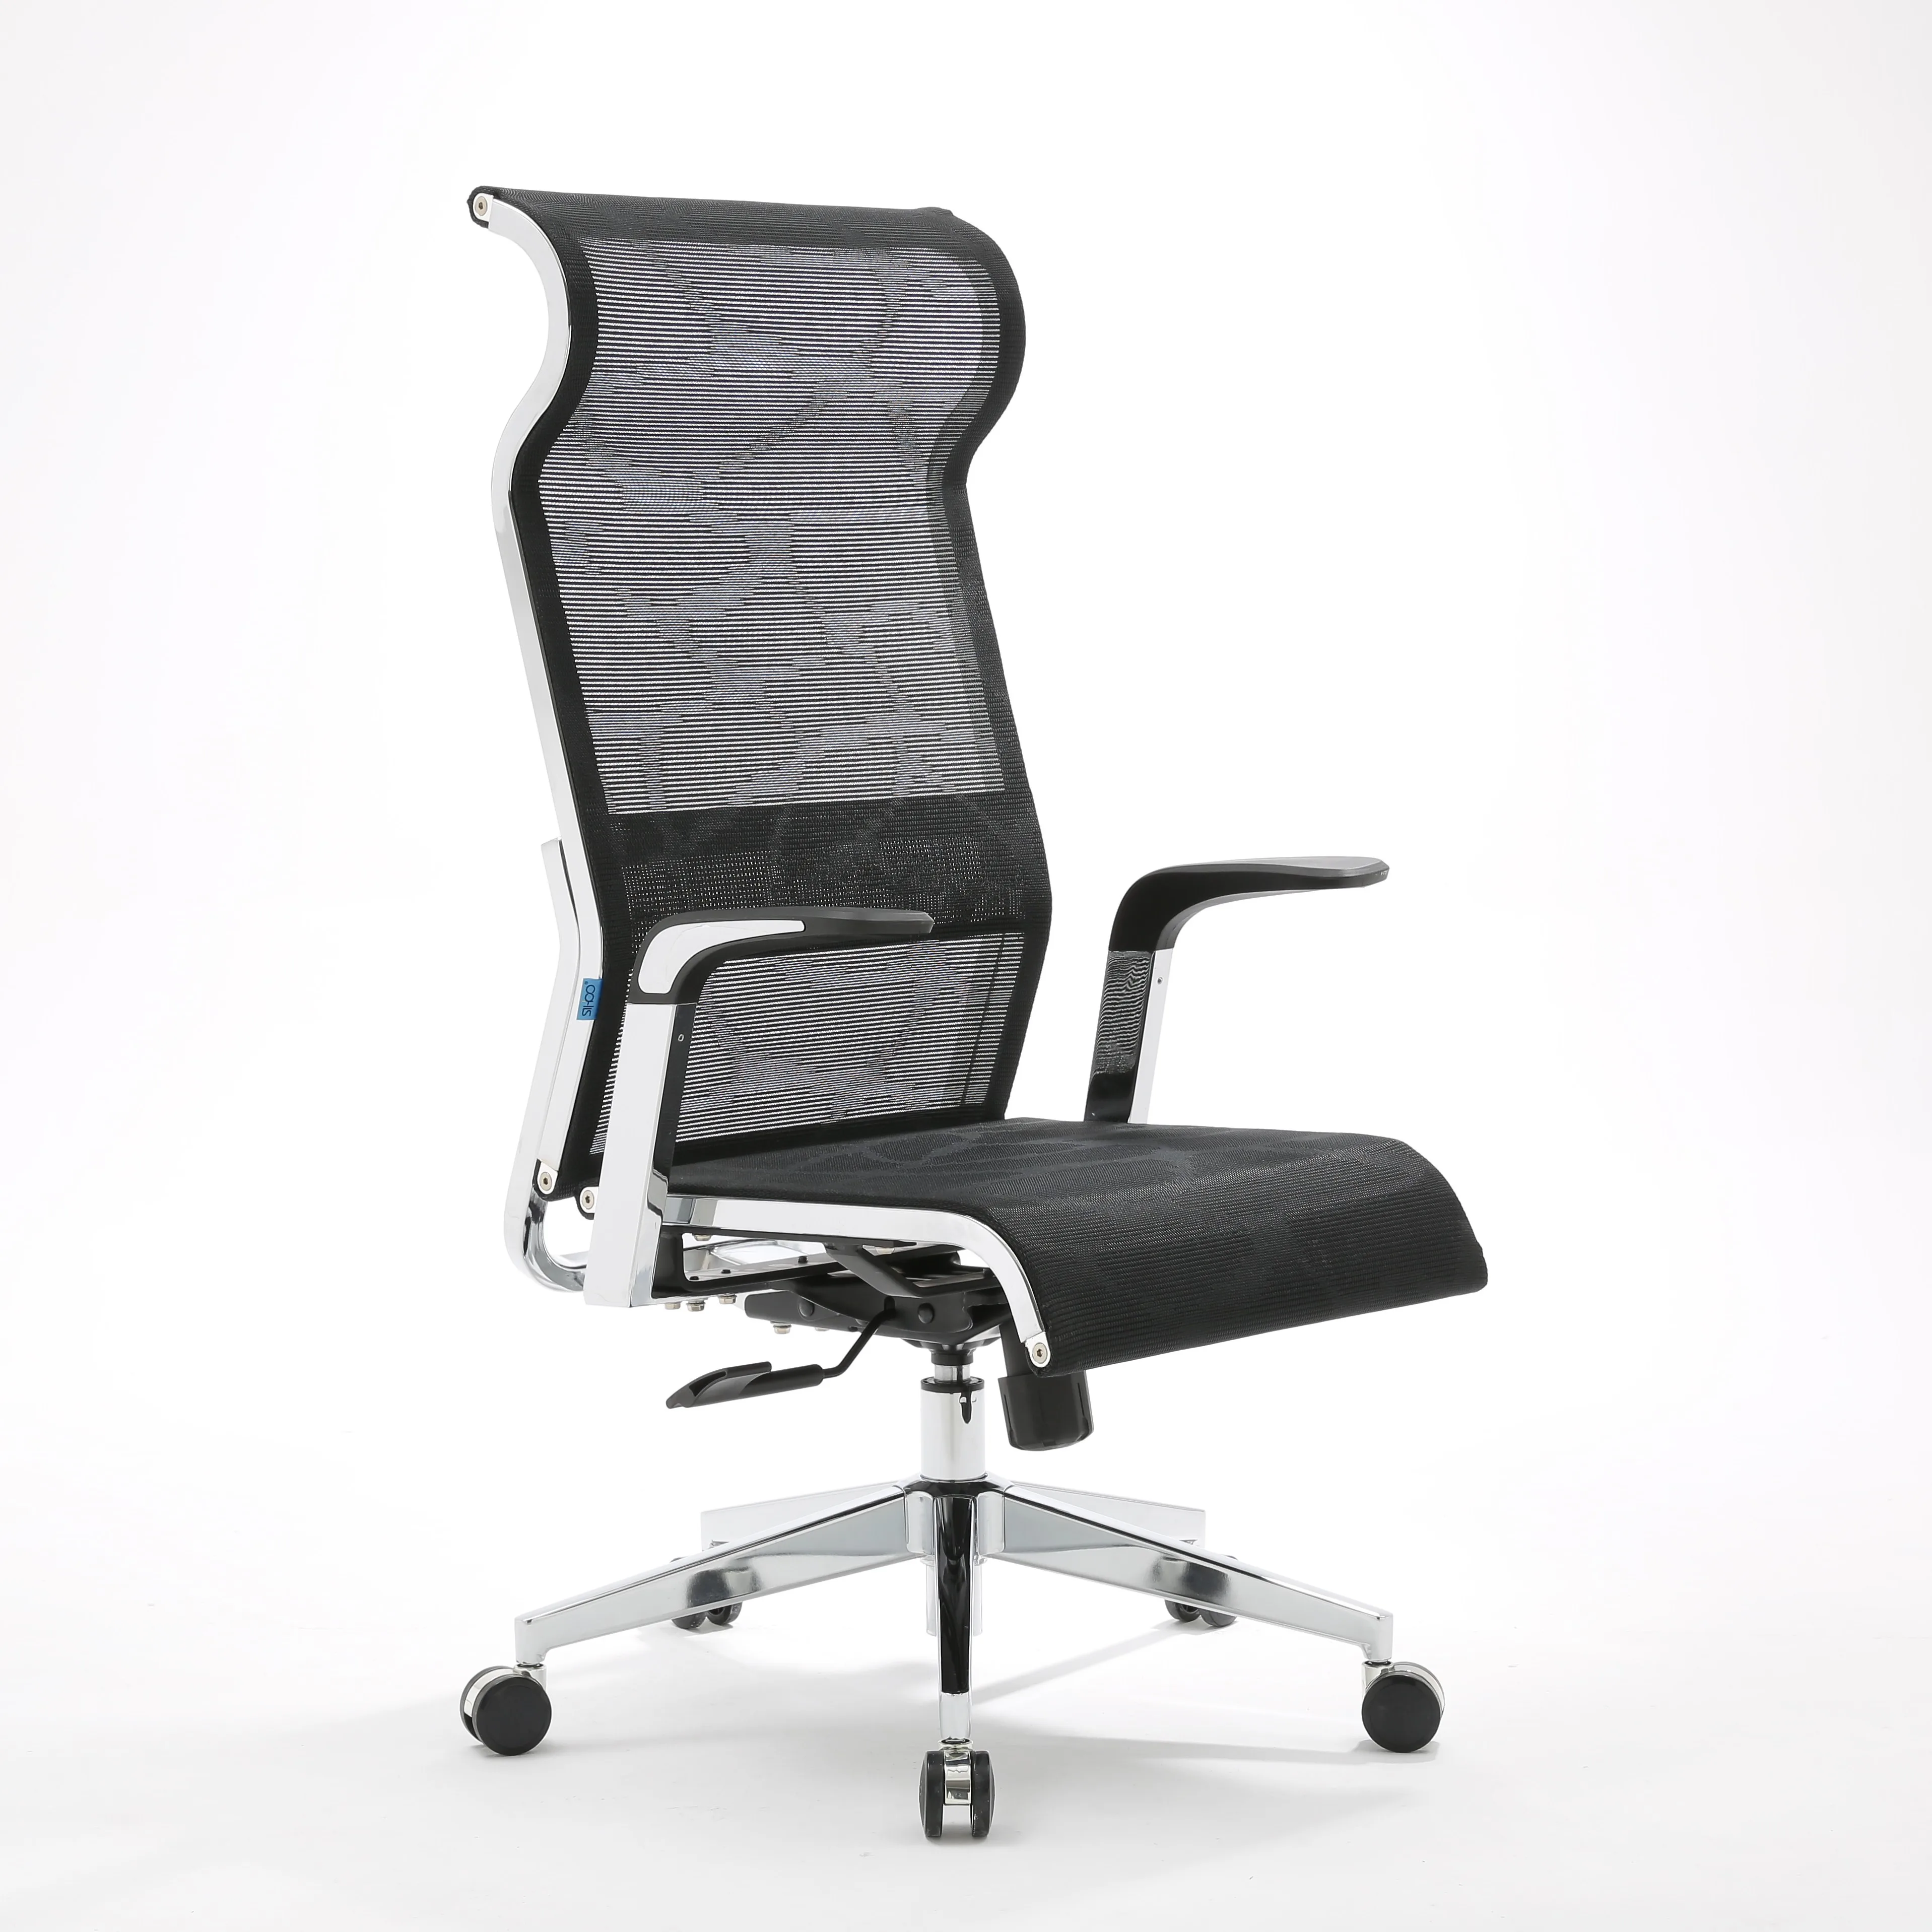 Sihoo Office Chair: m57